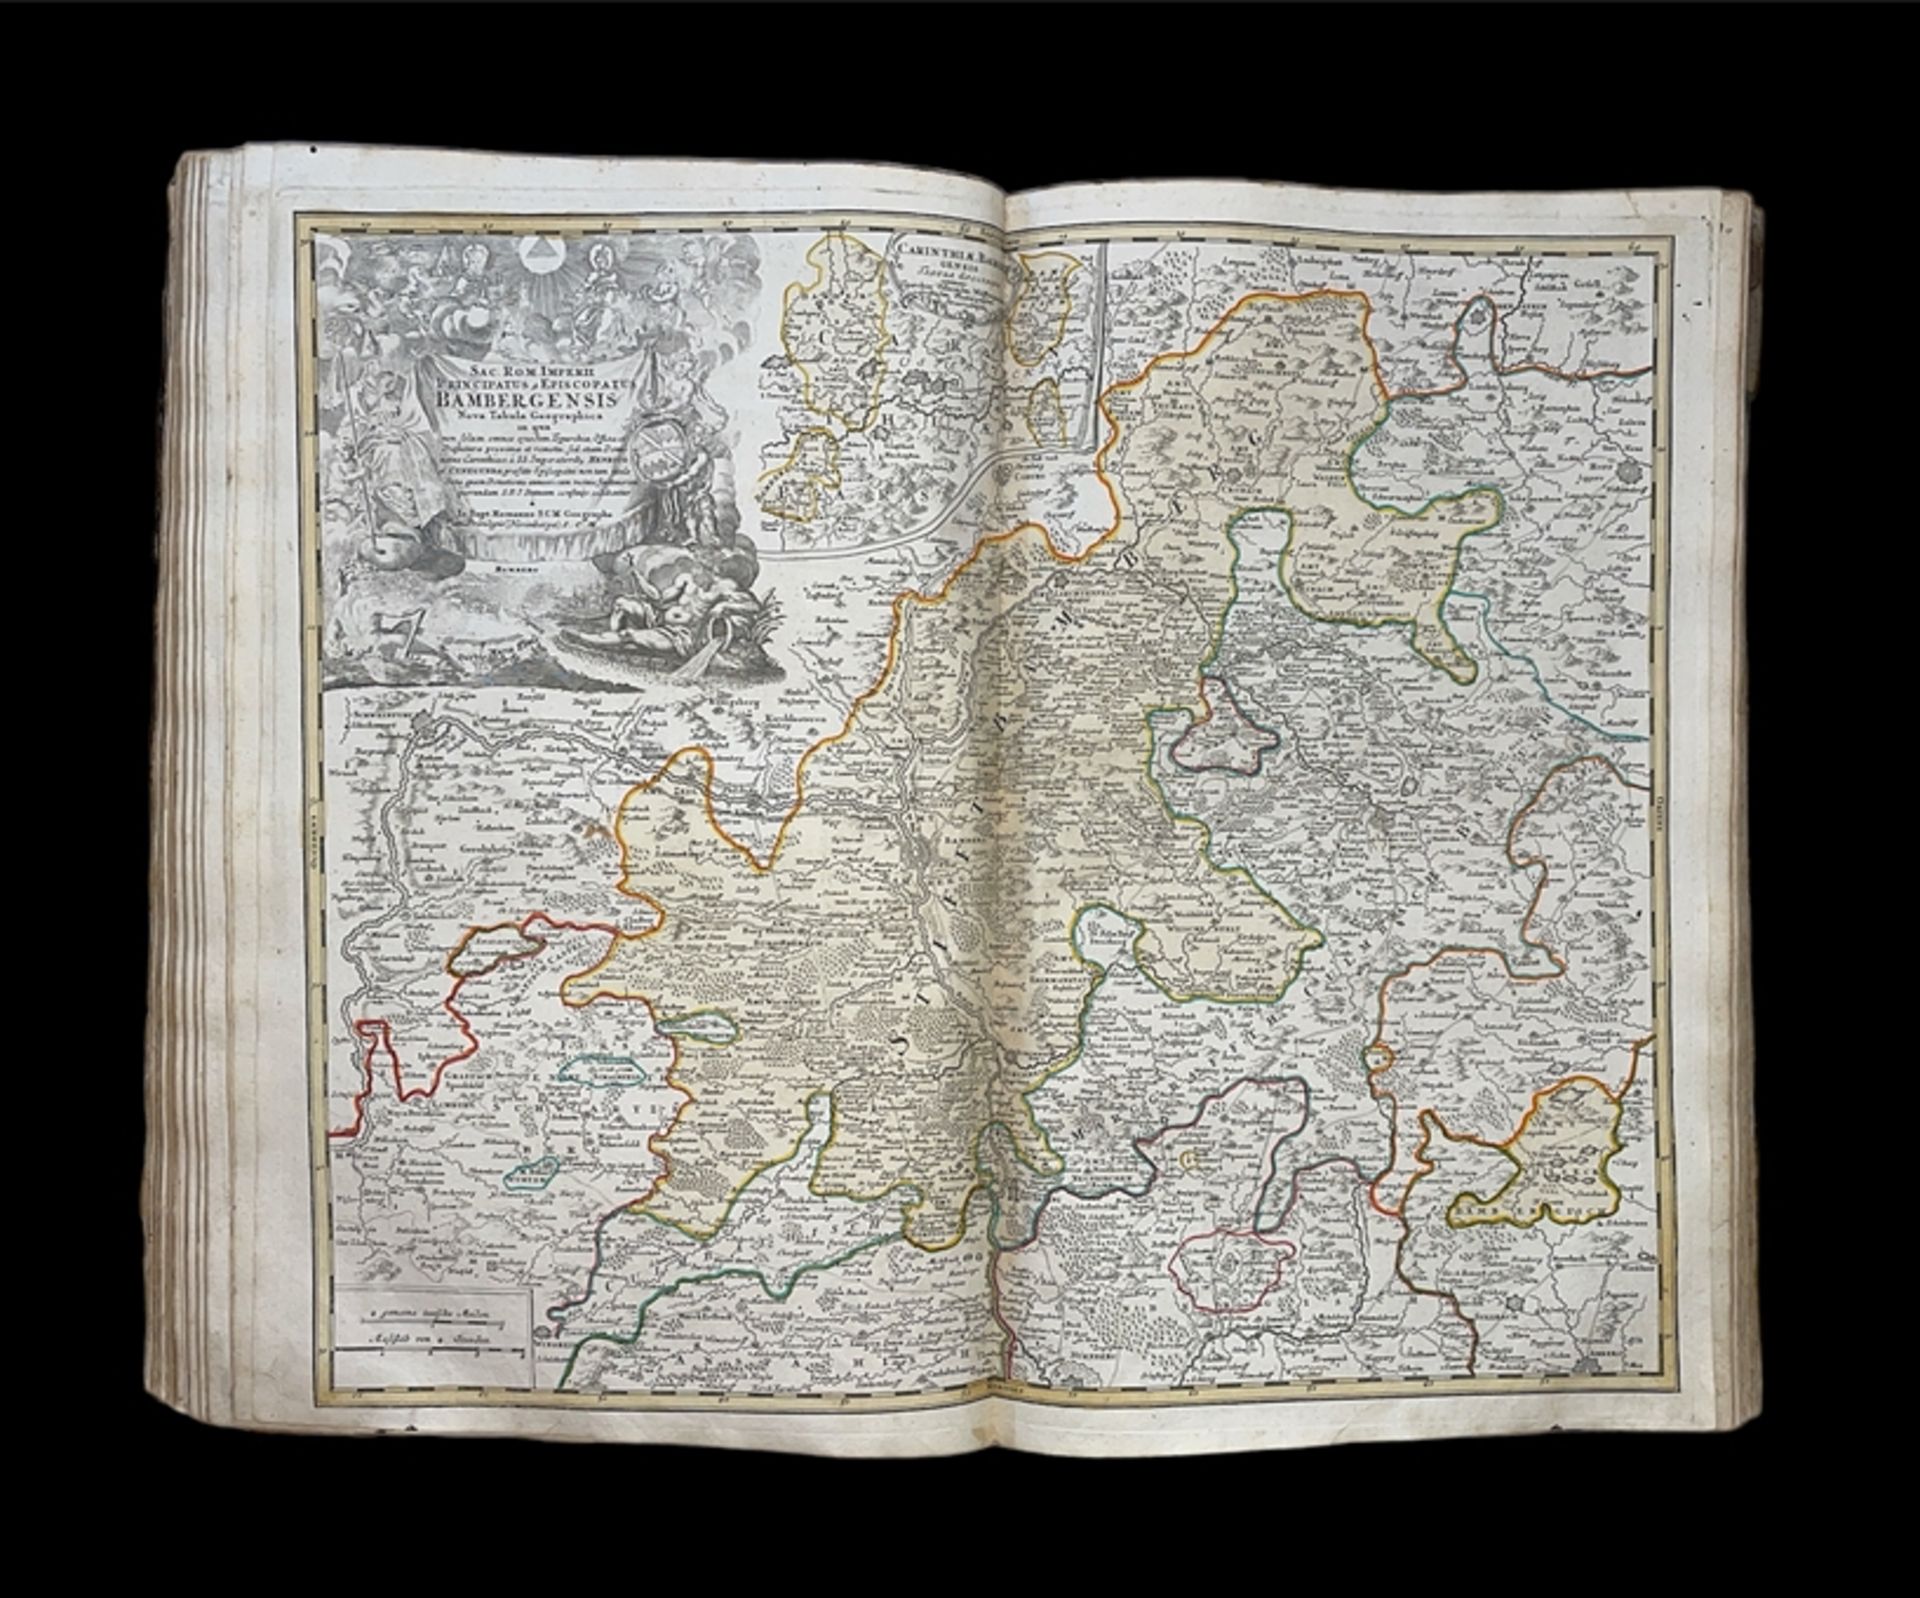 J.B. HOMANN "Neuer Atlas über die gantze Welt" (Nürnberg, 1712) - Image 68 of 125